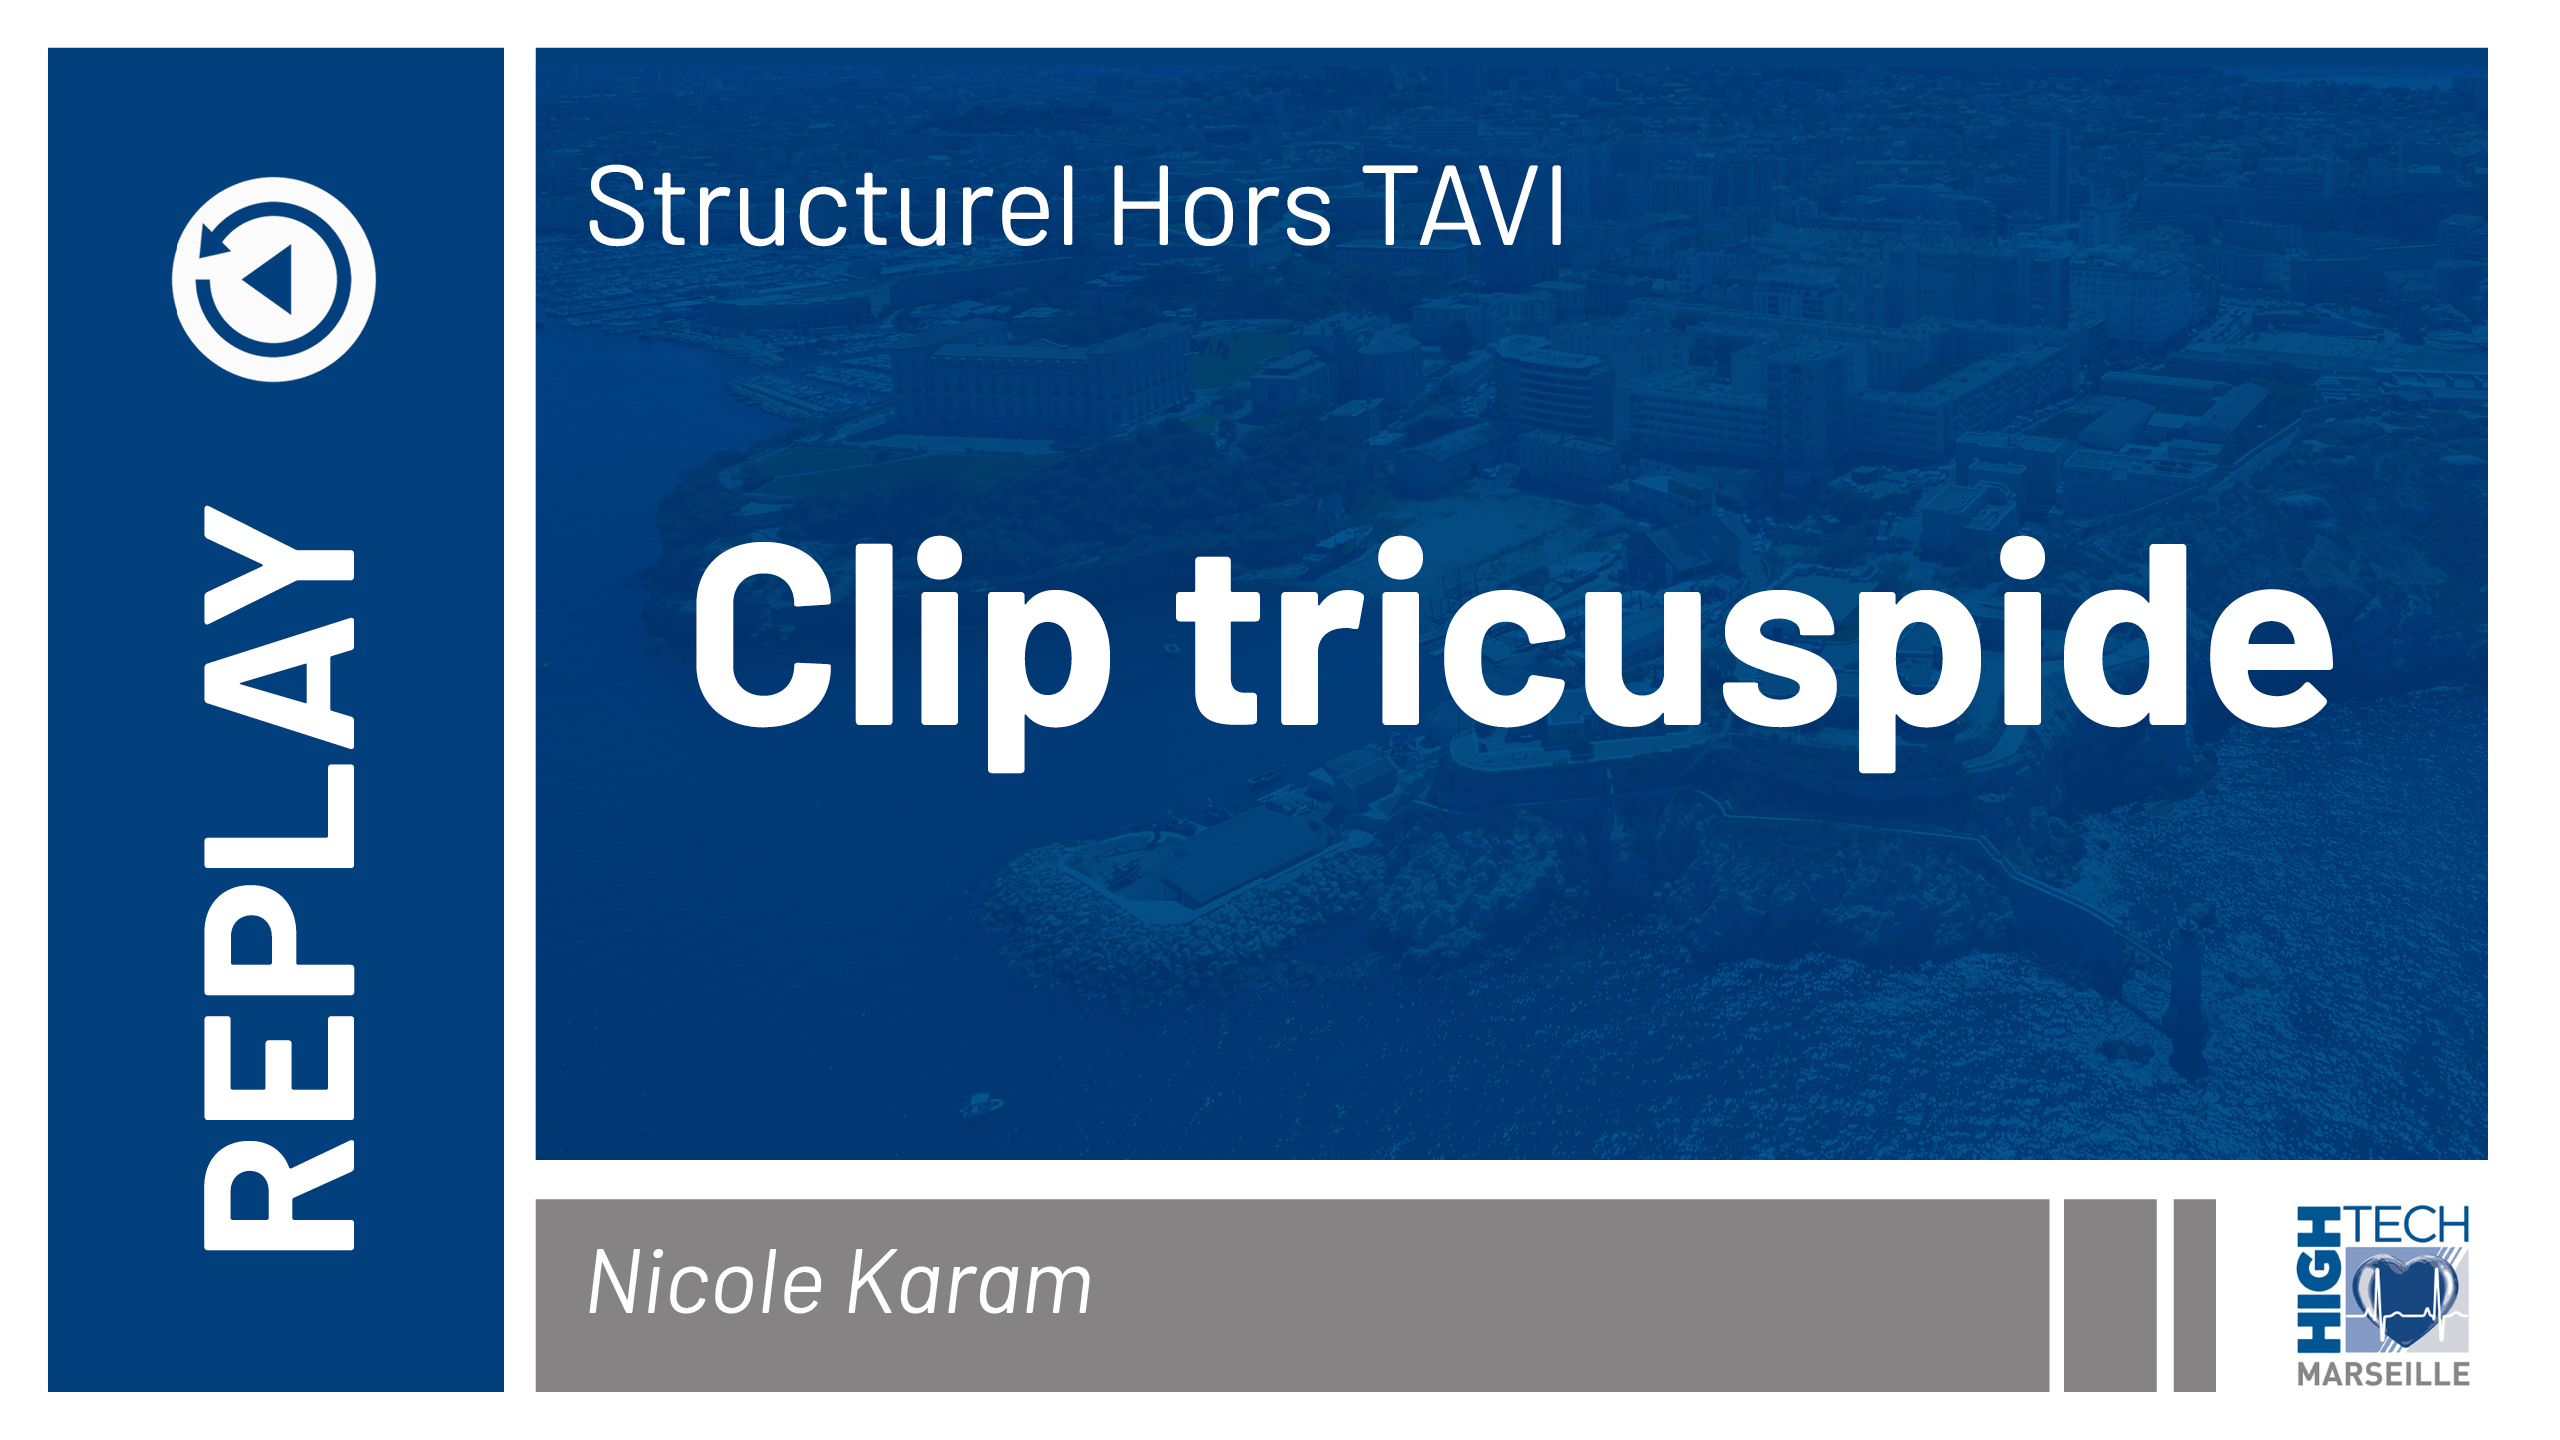 Clip tricuspide – Nicole Karam